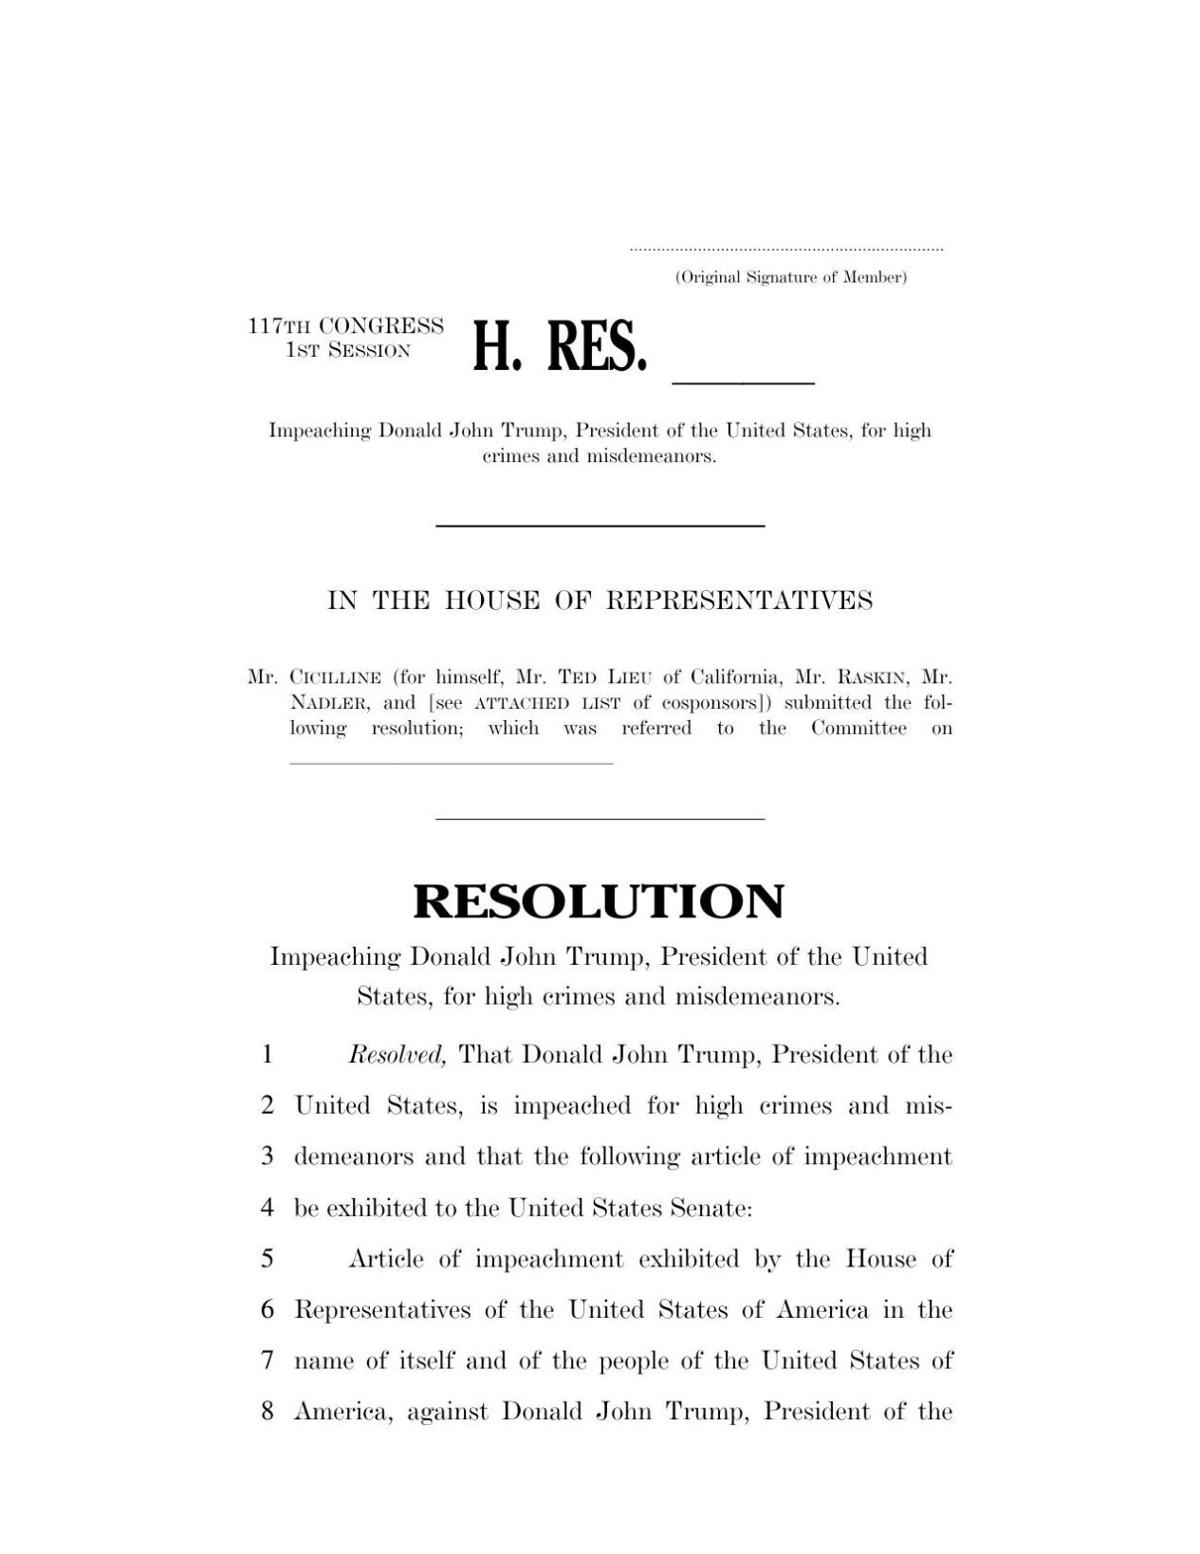 U.S. House impeachment resolution against President Donald Trump